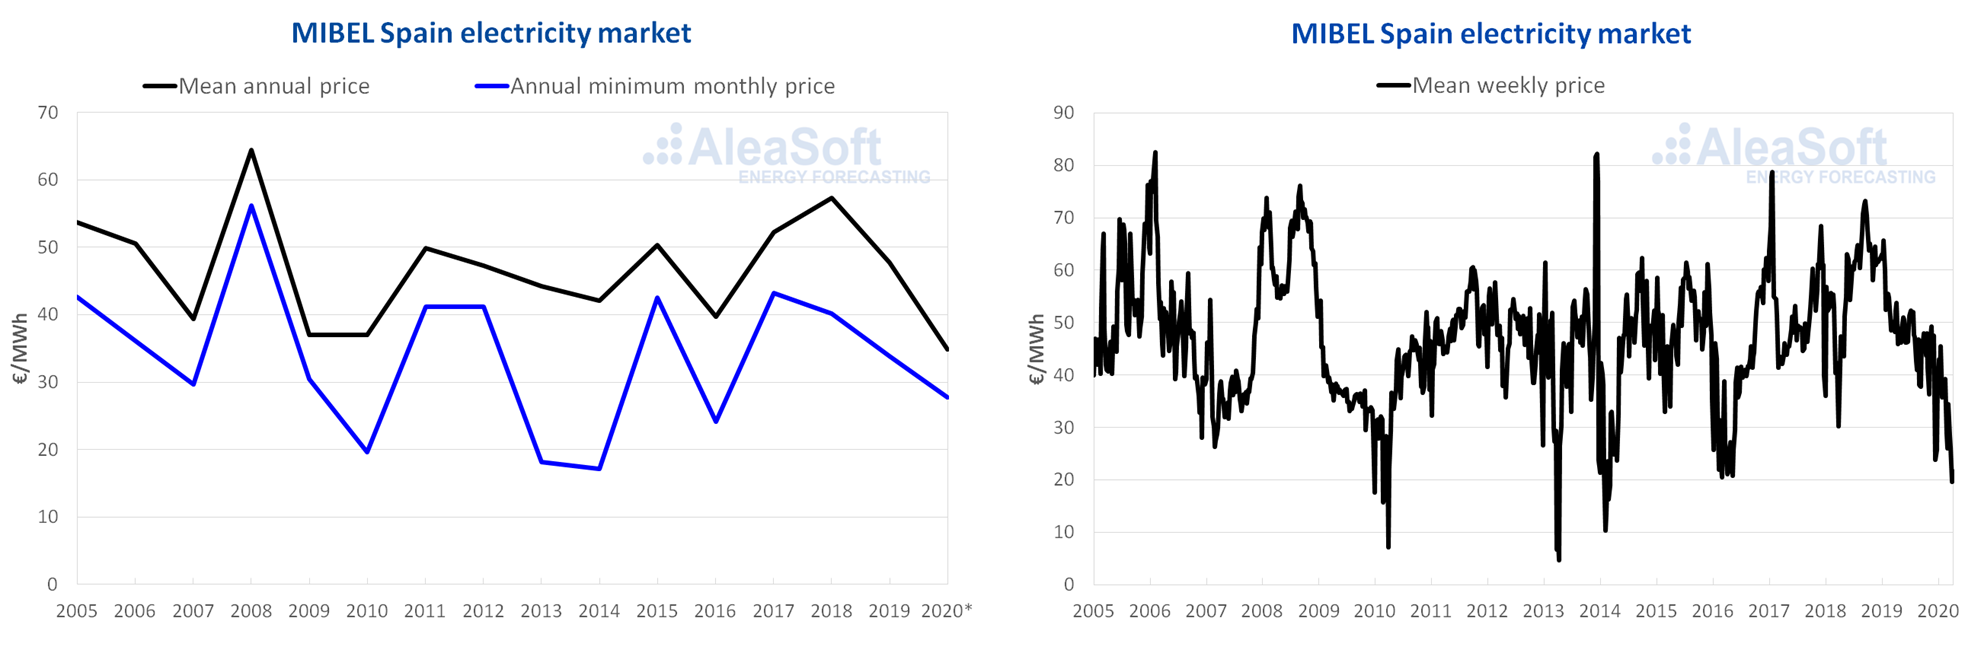 AleaSoft - MIBEL Spain electricity market price